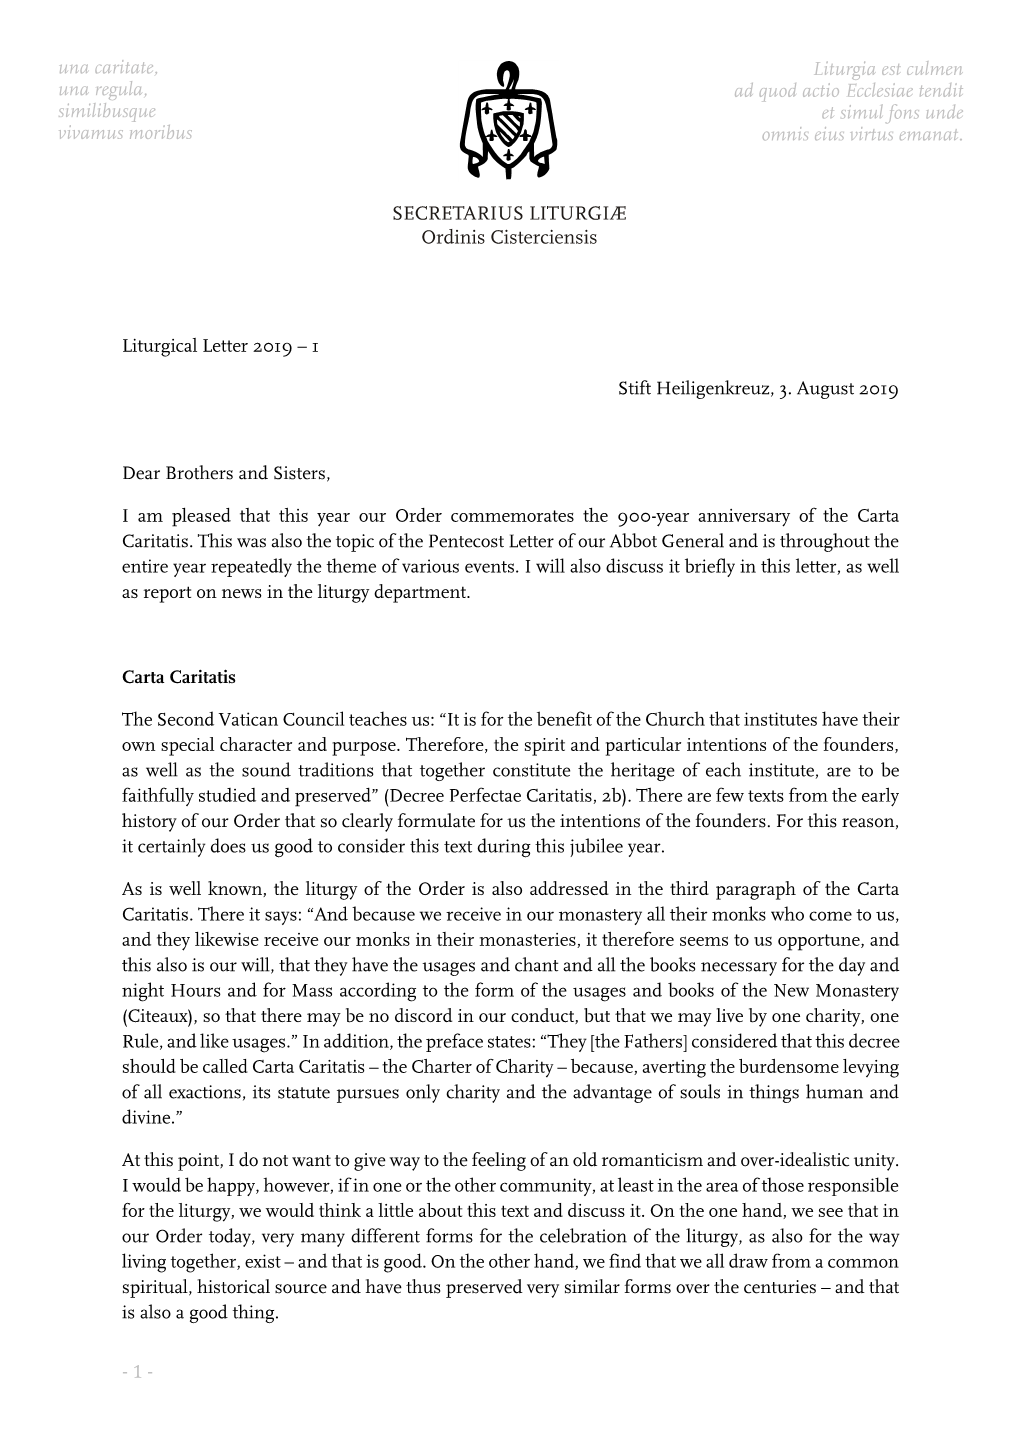 Liturgical Letter 2019 – 1 Stift Heiligenkreuz, 3. August